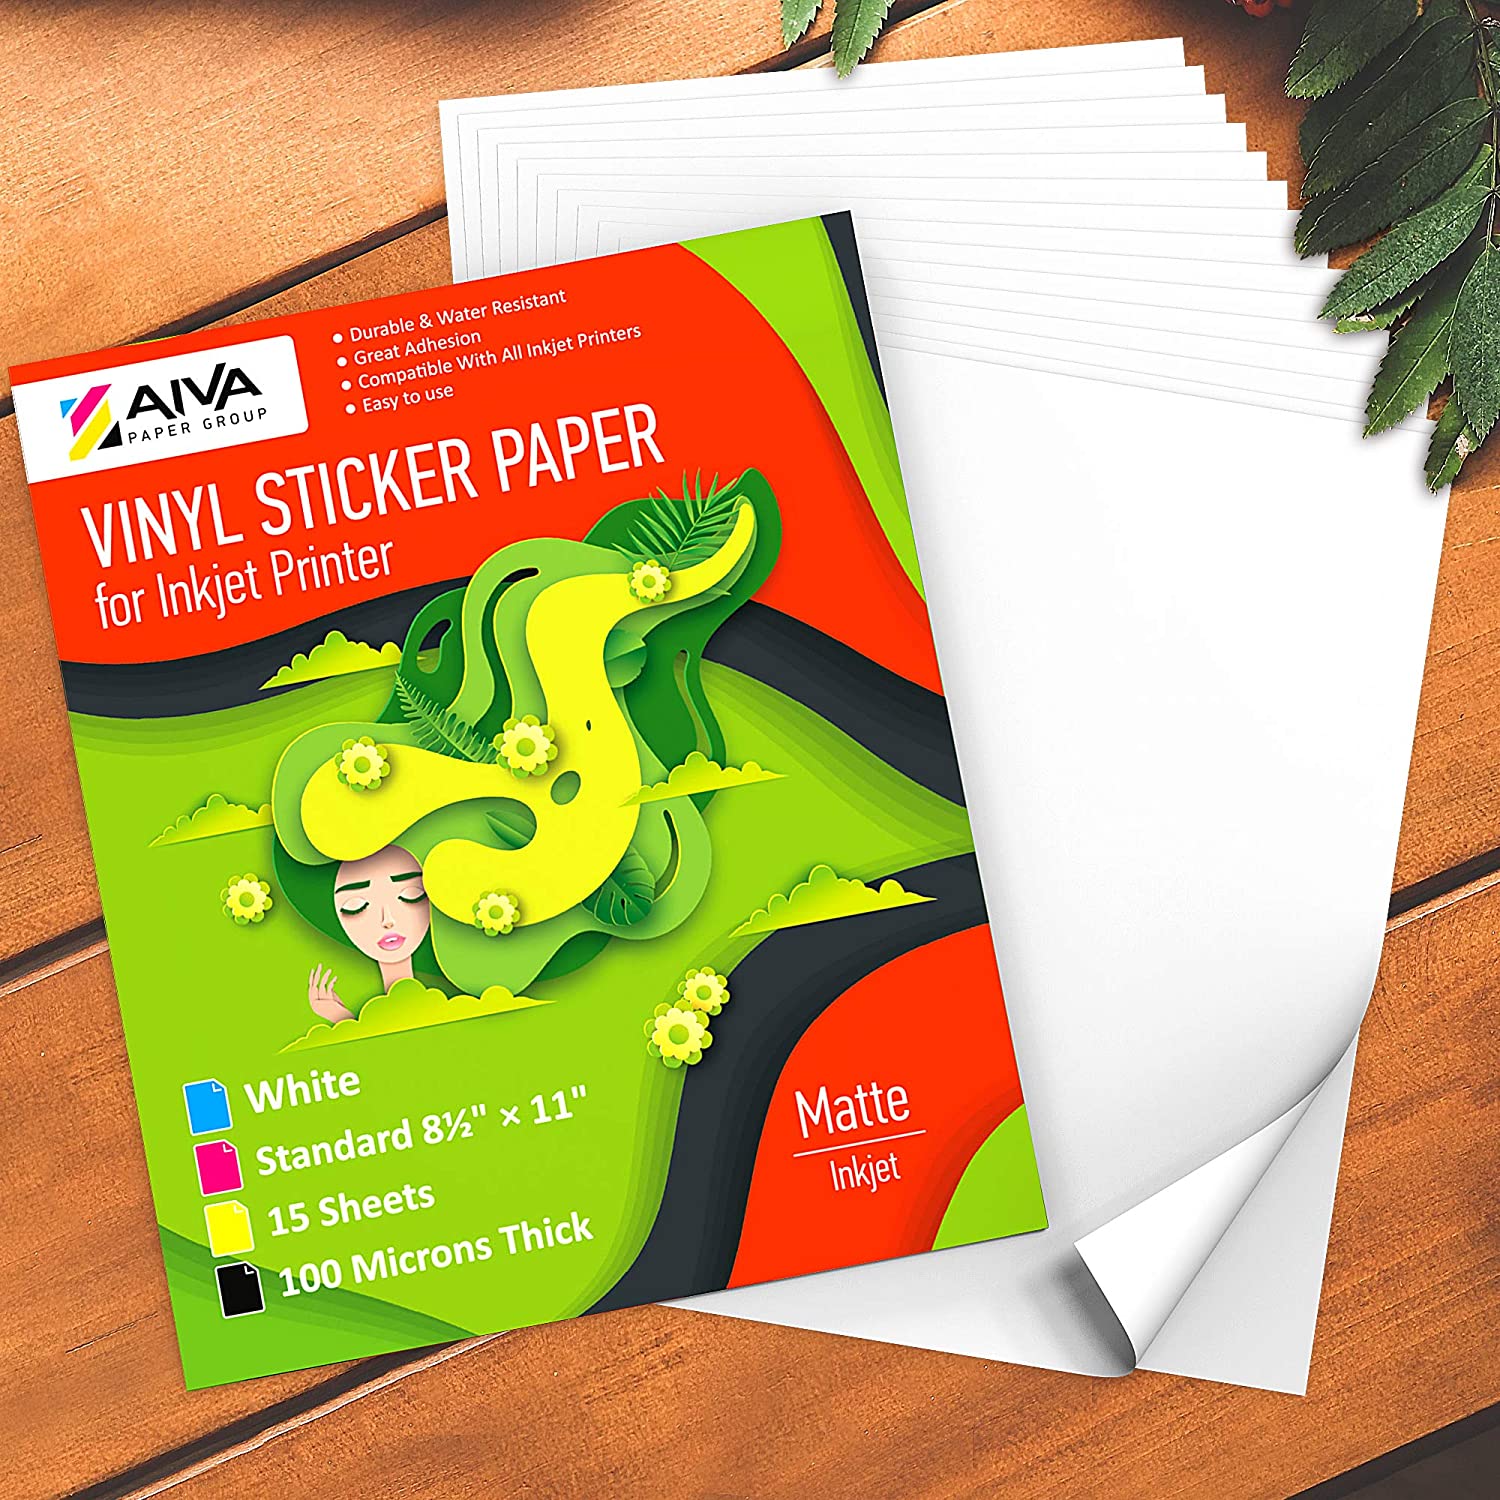 Printable Vinyl Sticker Paper 15 Sheets - Glossy White Waterproof Printable  Sticker Paper for Inkjet Printer & Laser Printer, Size 8.5x11 A4 Printer